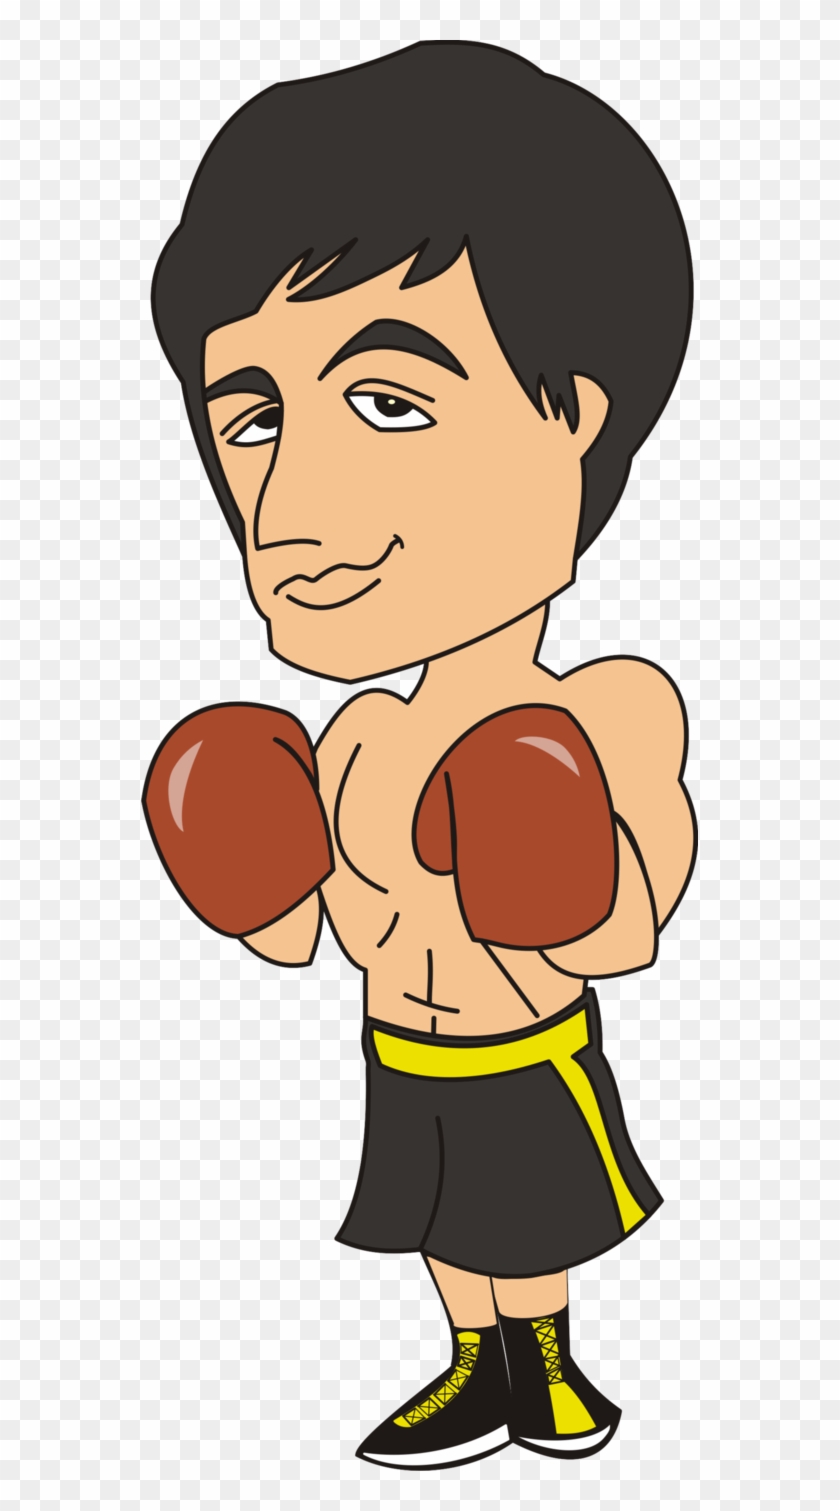 Rocky Balboa Clipart - Rocky Balboa Clip Art #561956